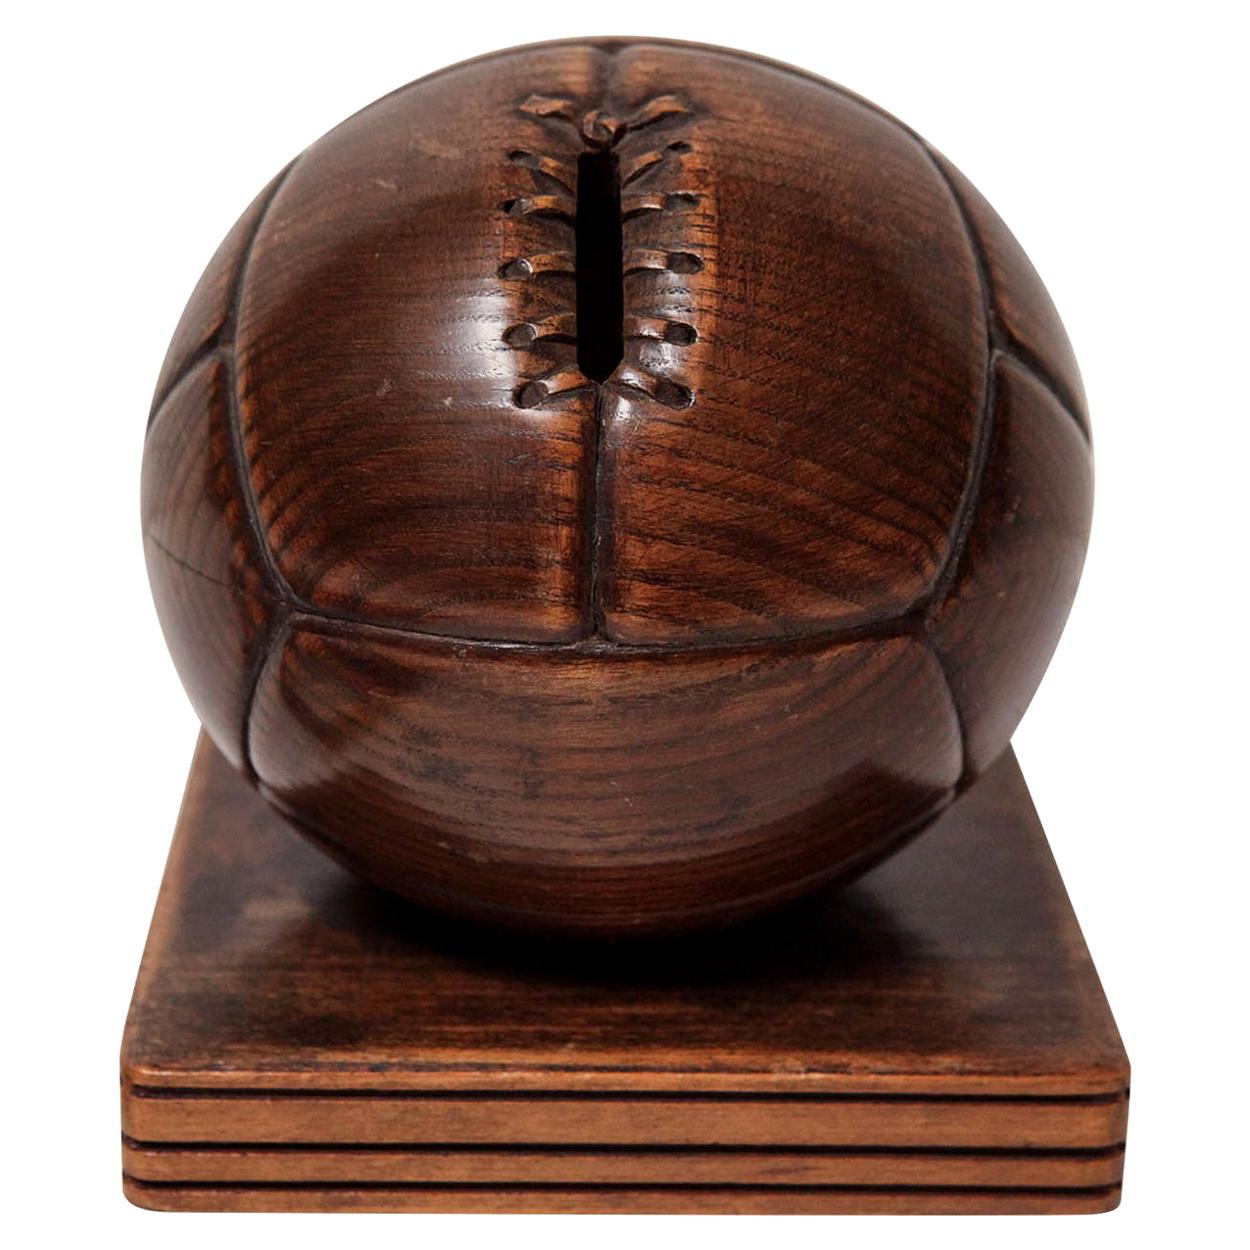 Tirelire Ball and Ball Ball en bois sculpté à la main